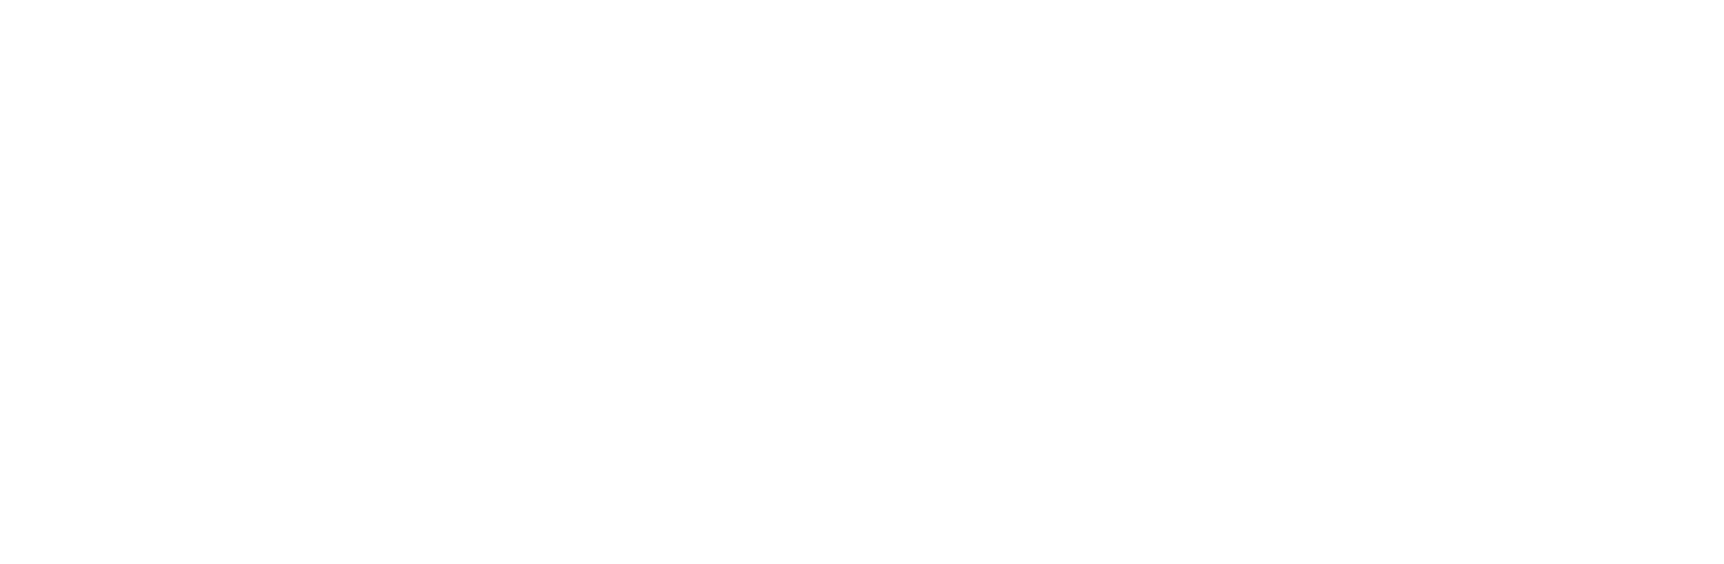 Logan Logo - Logan Technology Inc